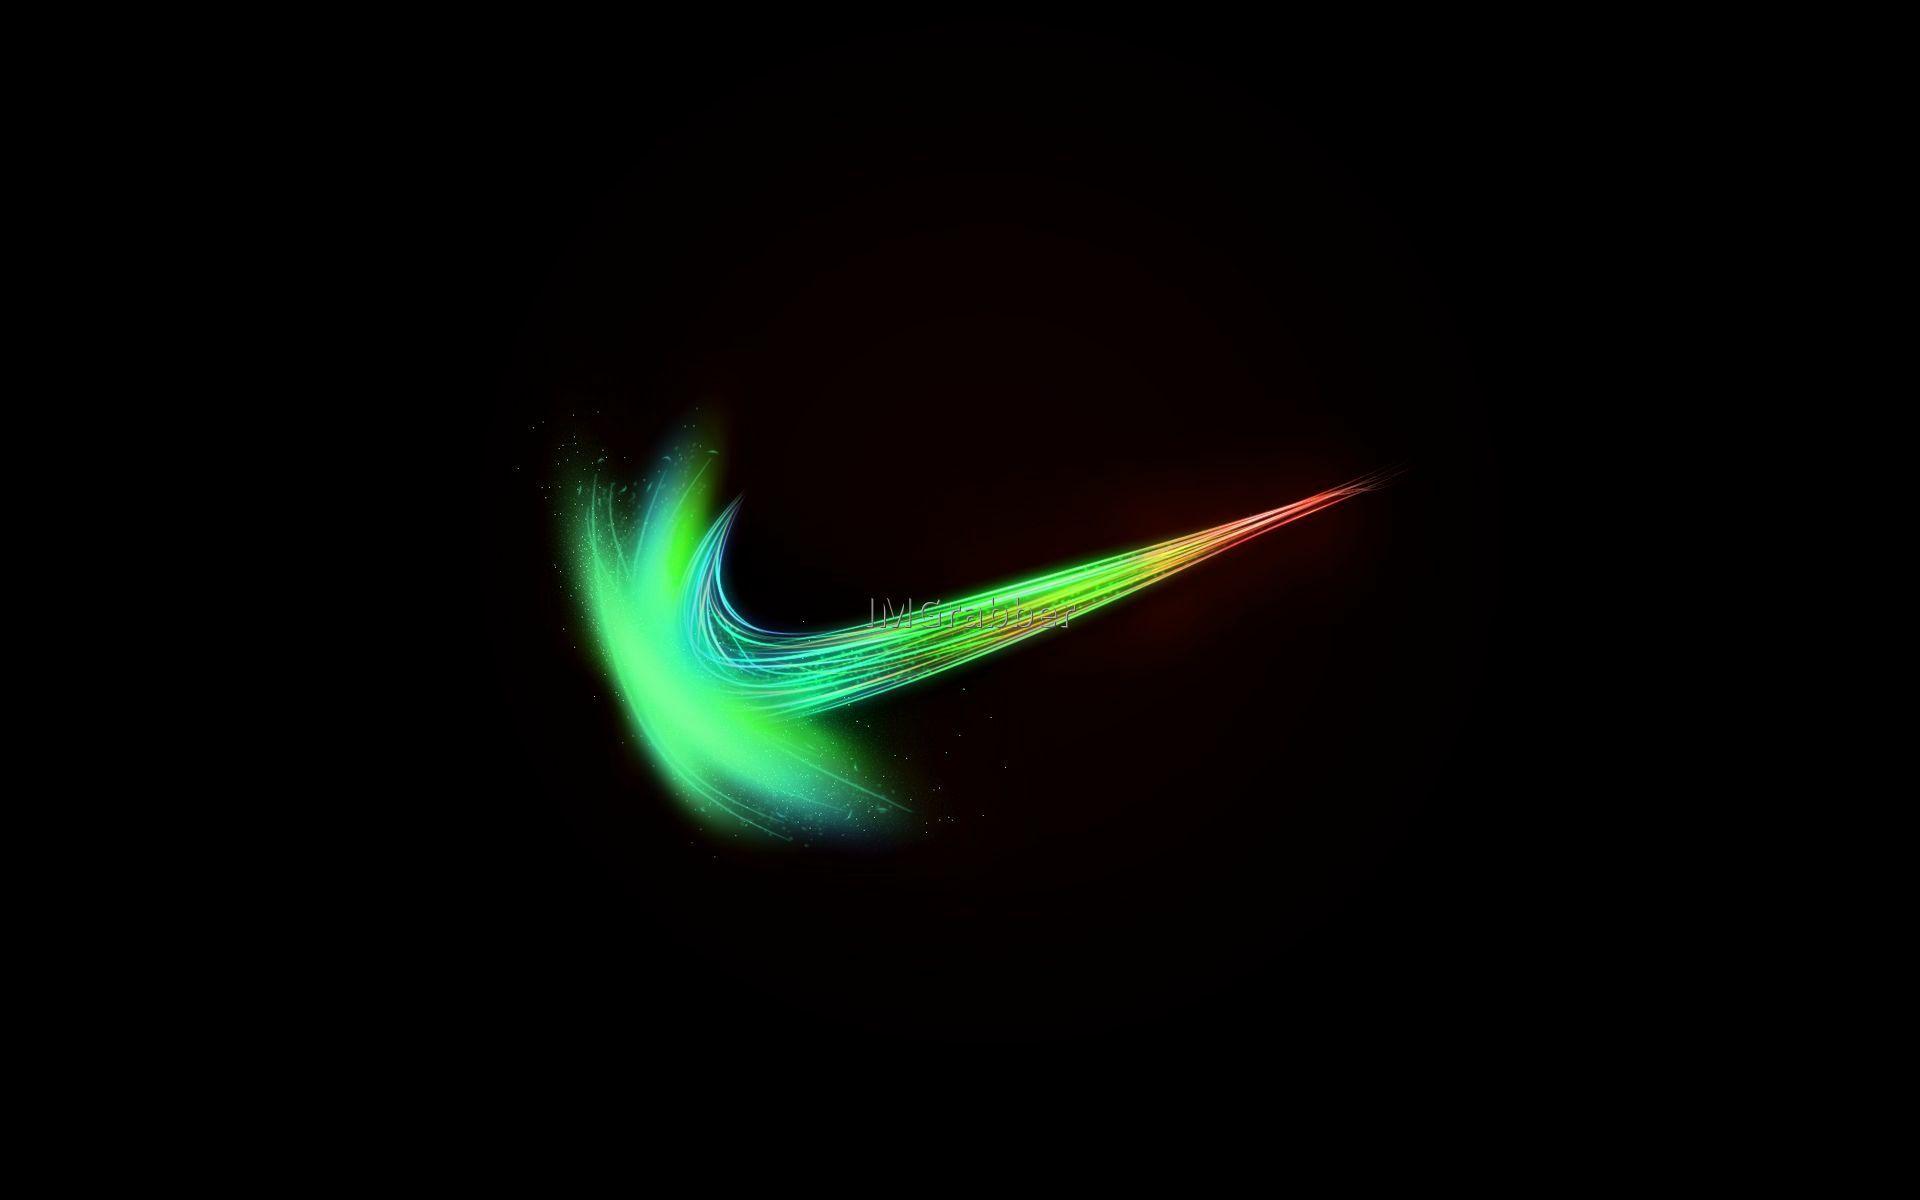 Cool Nike Symbols. tianyihengfeng. Free Download High Definition